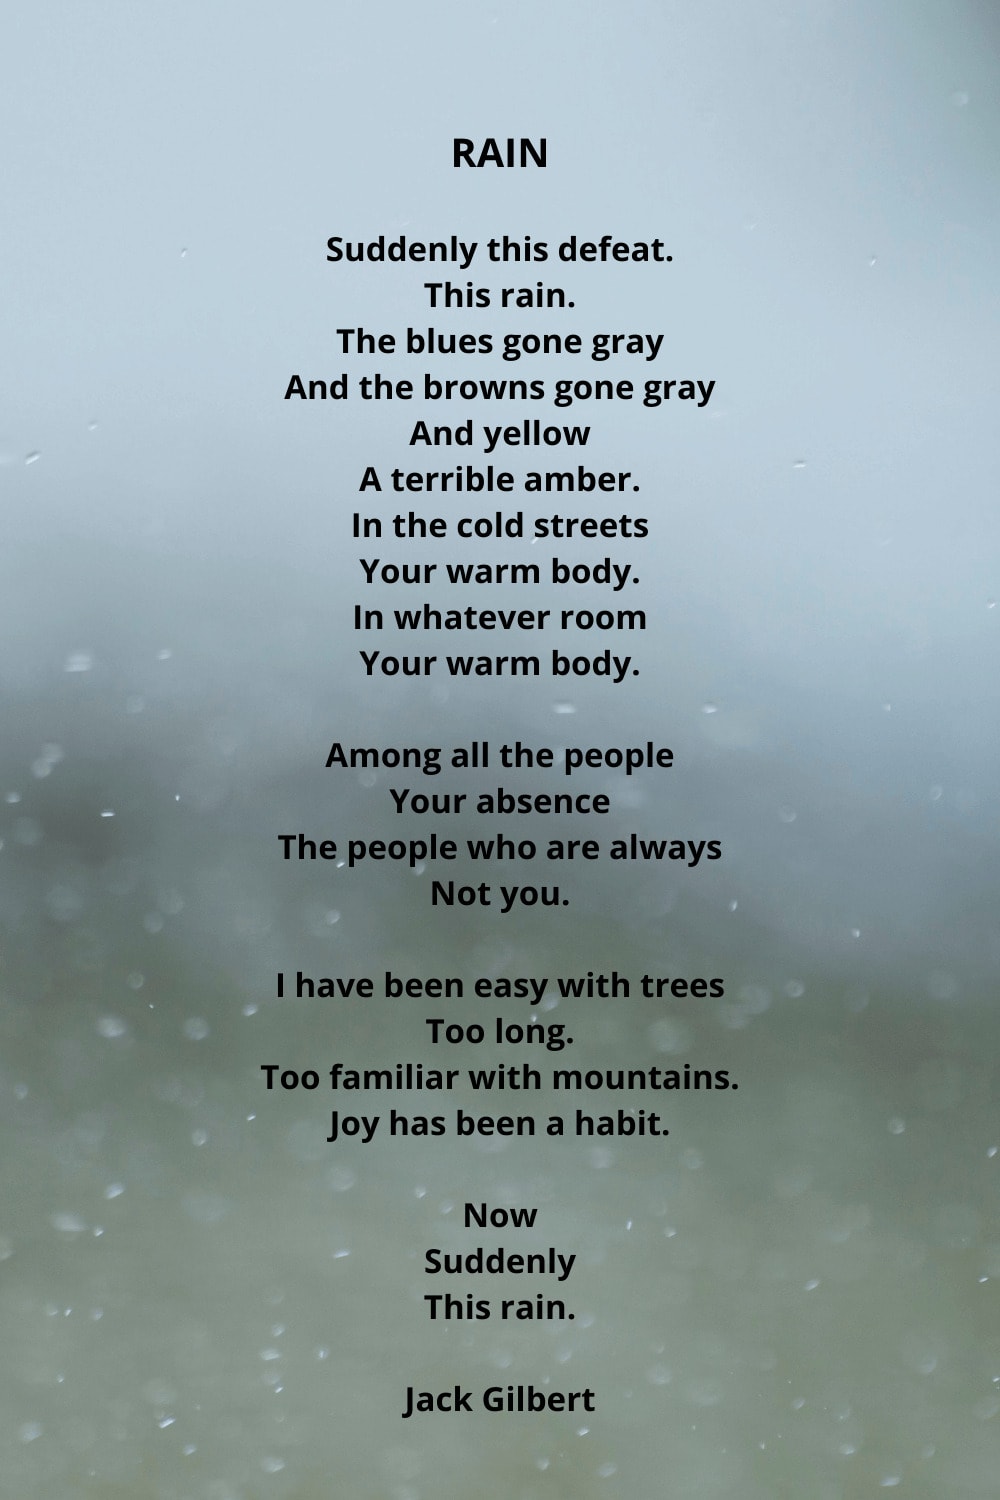 Suddenly this rain poem